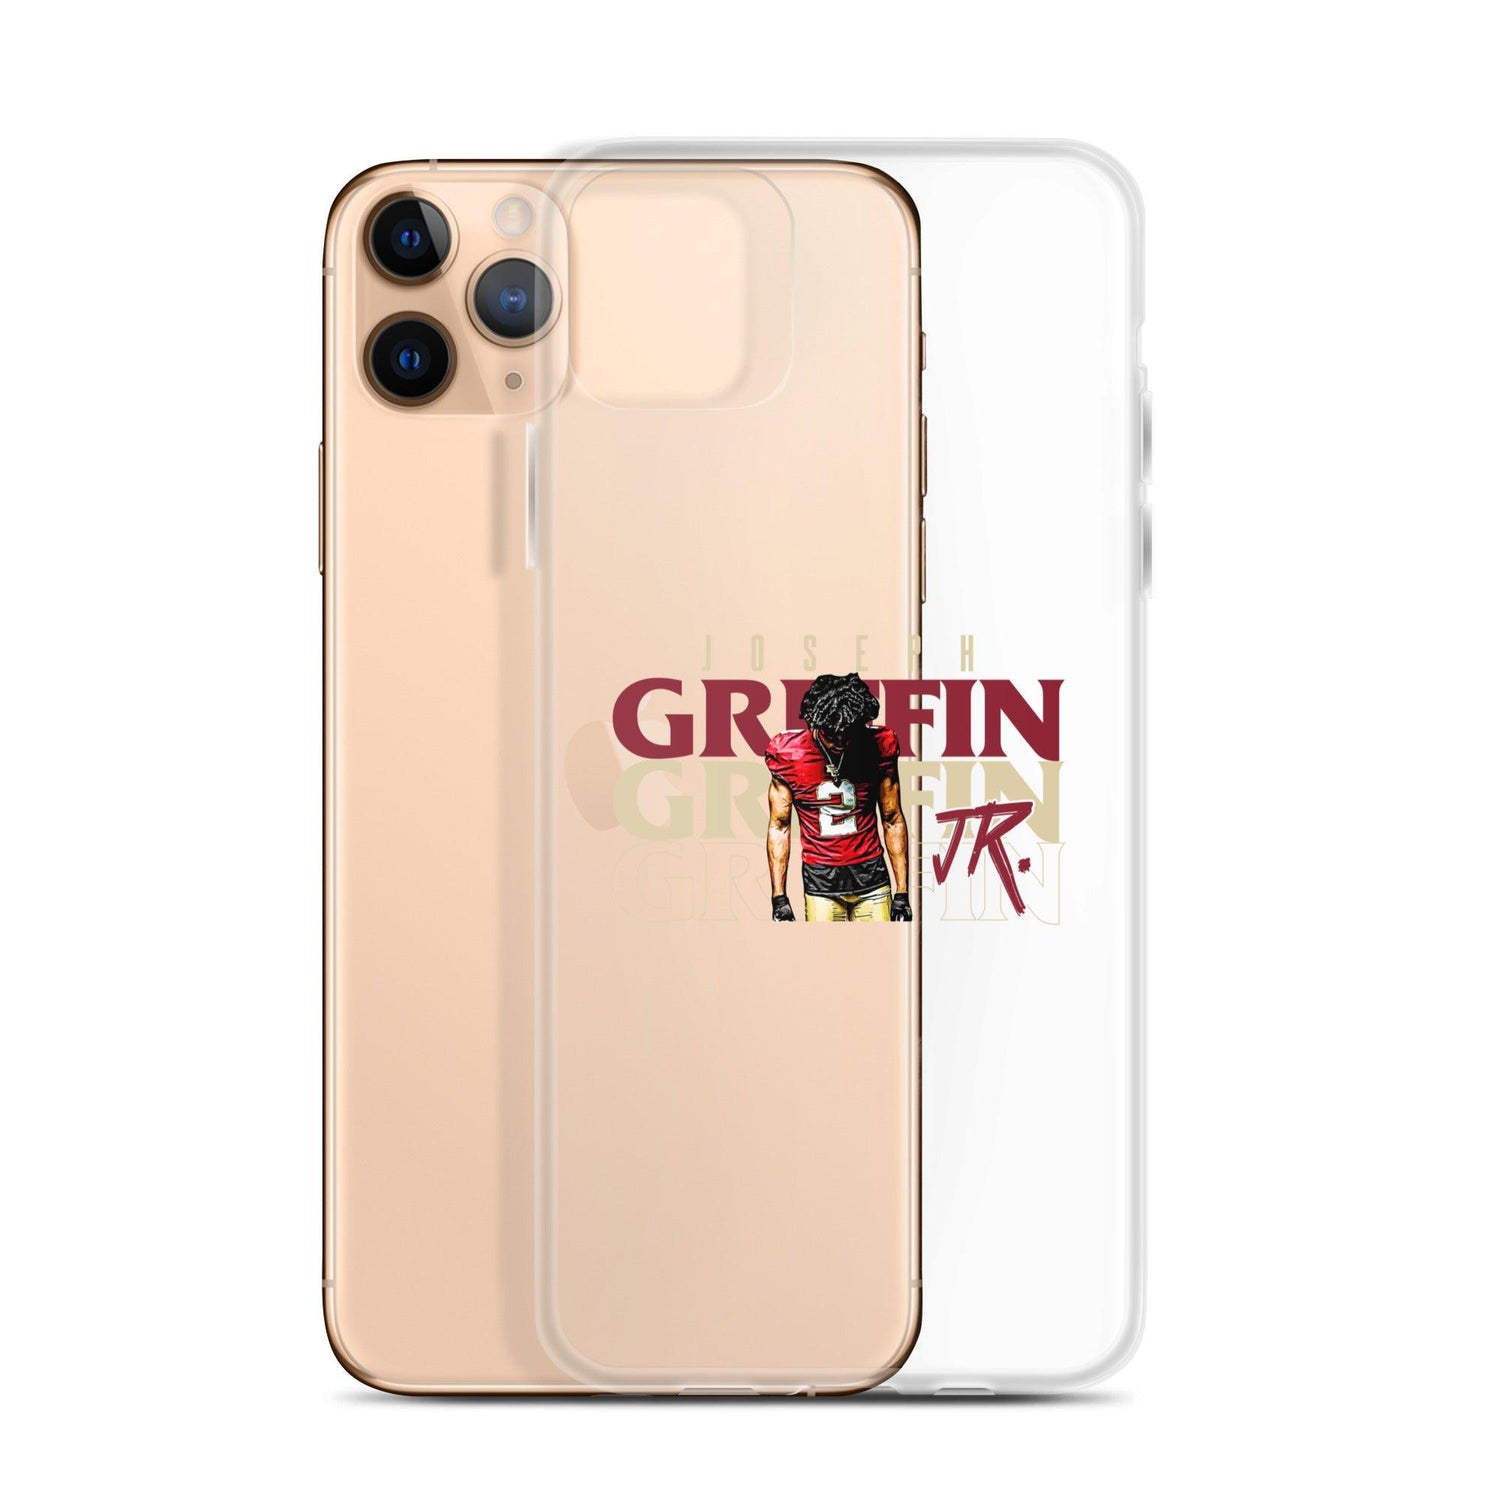 Joseph Griffin Jr. "Gameday" iPhone Case - Fan Arch